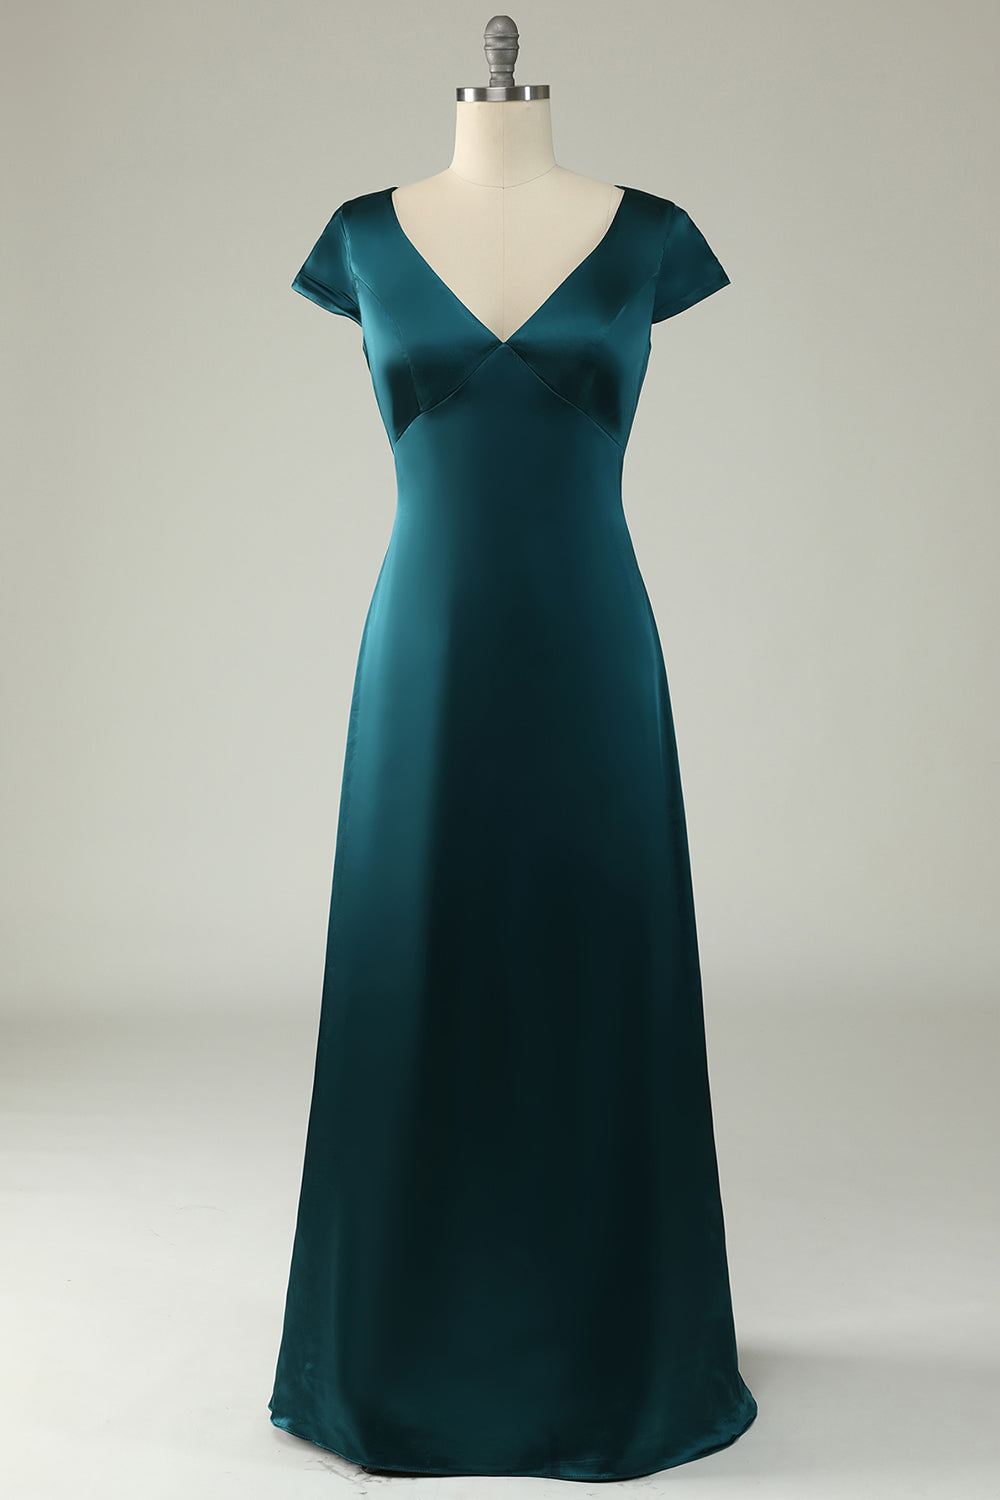 Satin V-Neck Dark Green Long Prom Dress